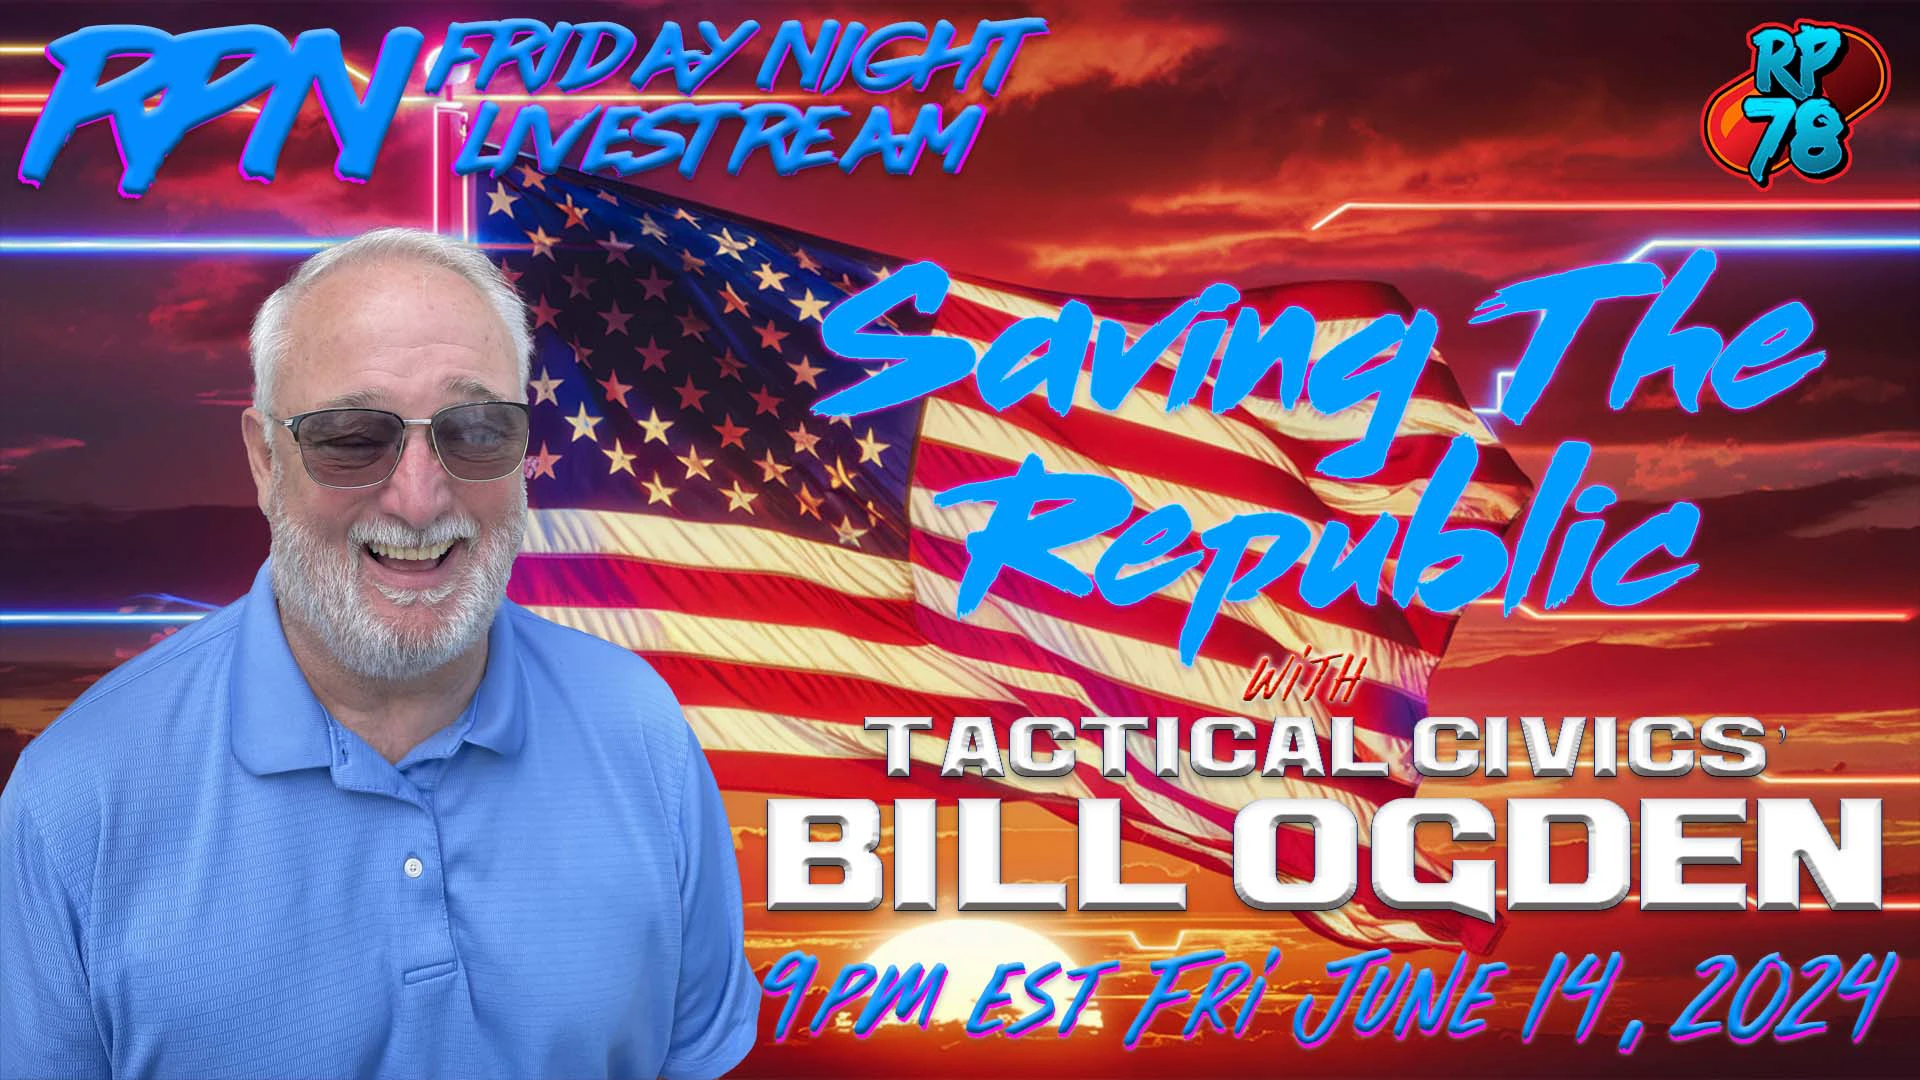 Saving The Republic with Bill Ogden of Tactical Civics on Fri Night Livestream